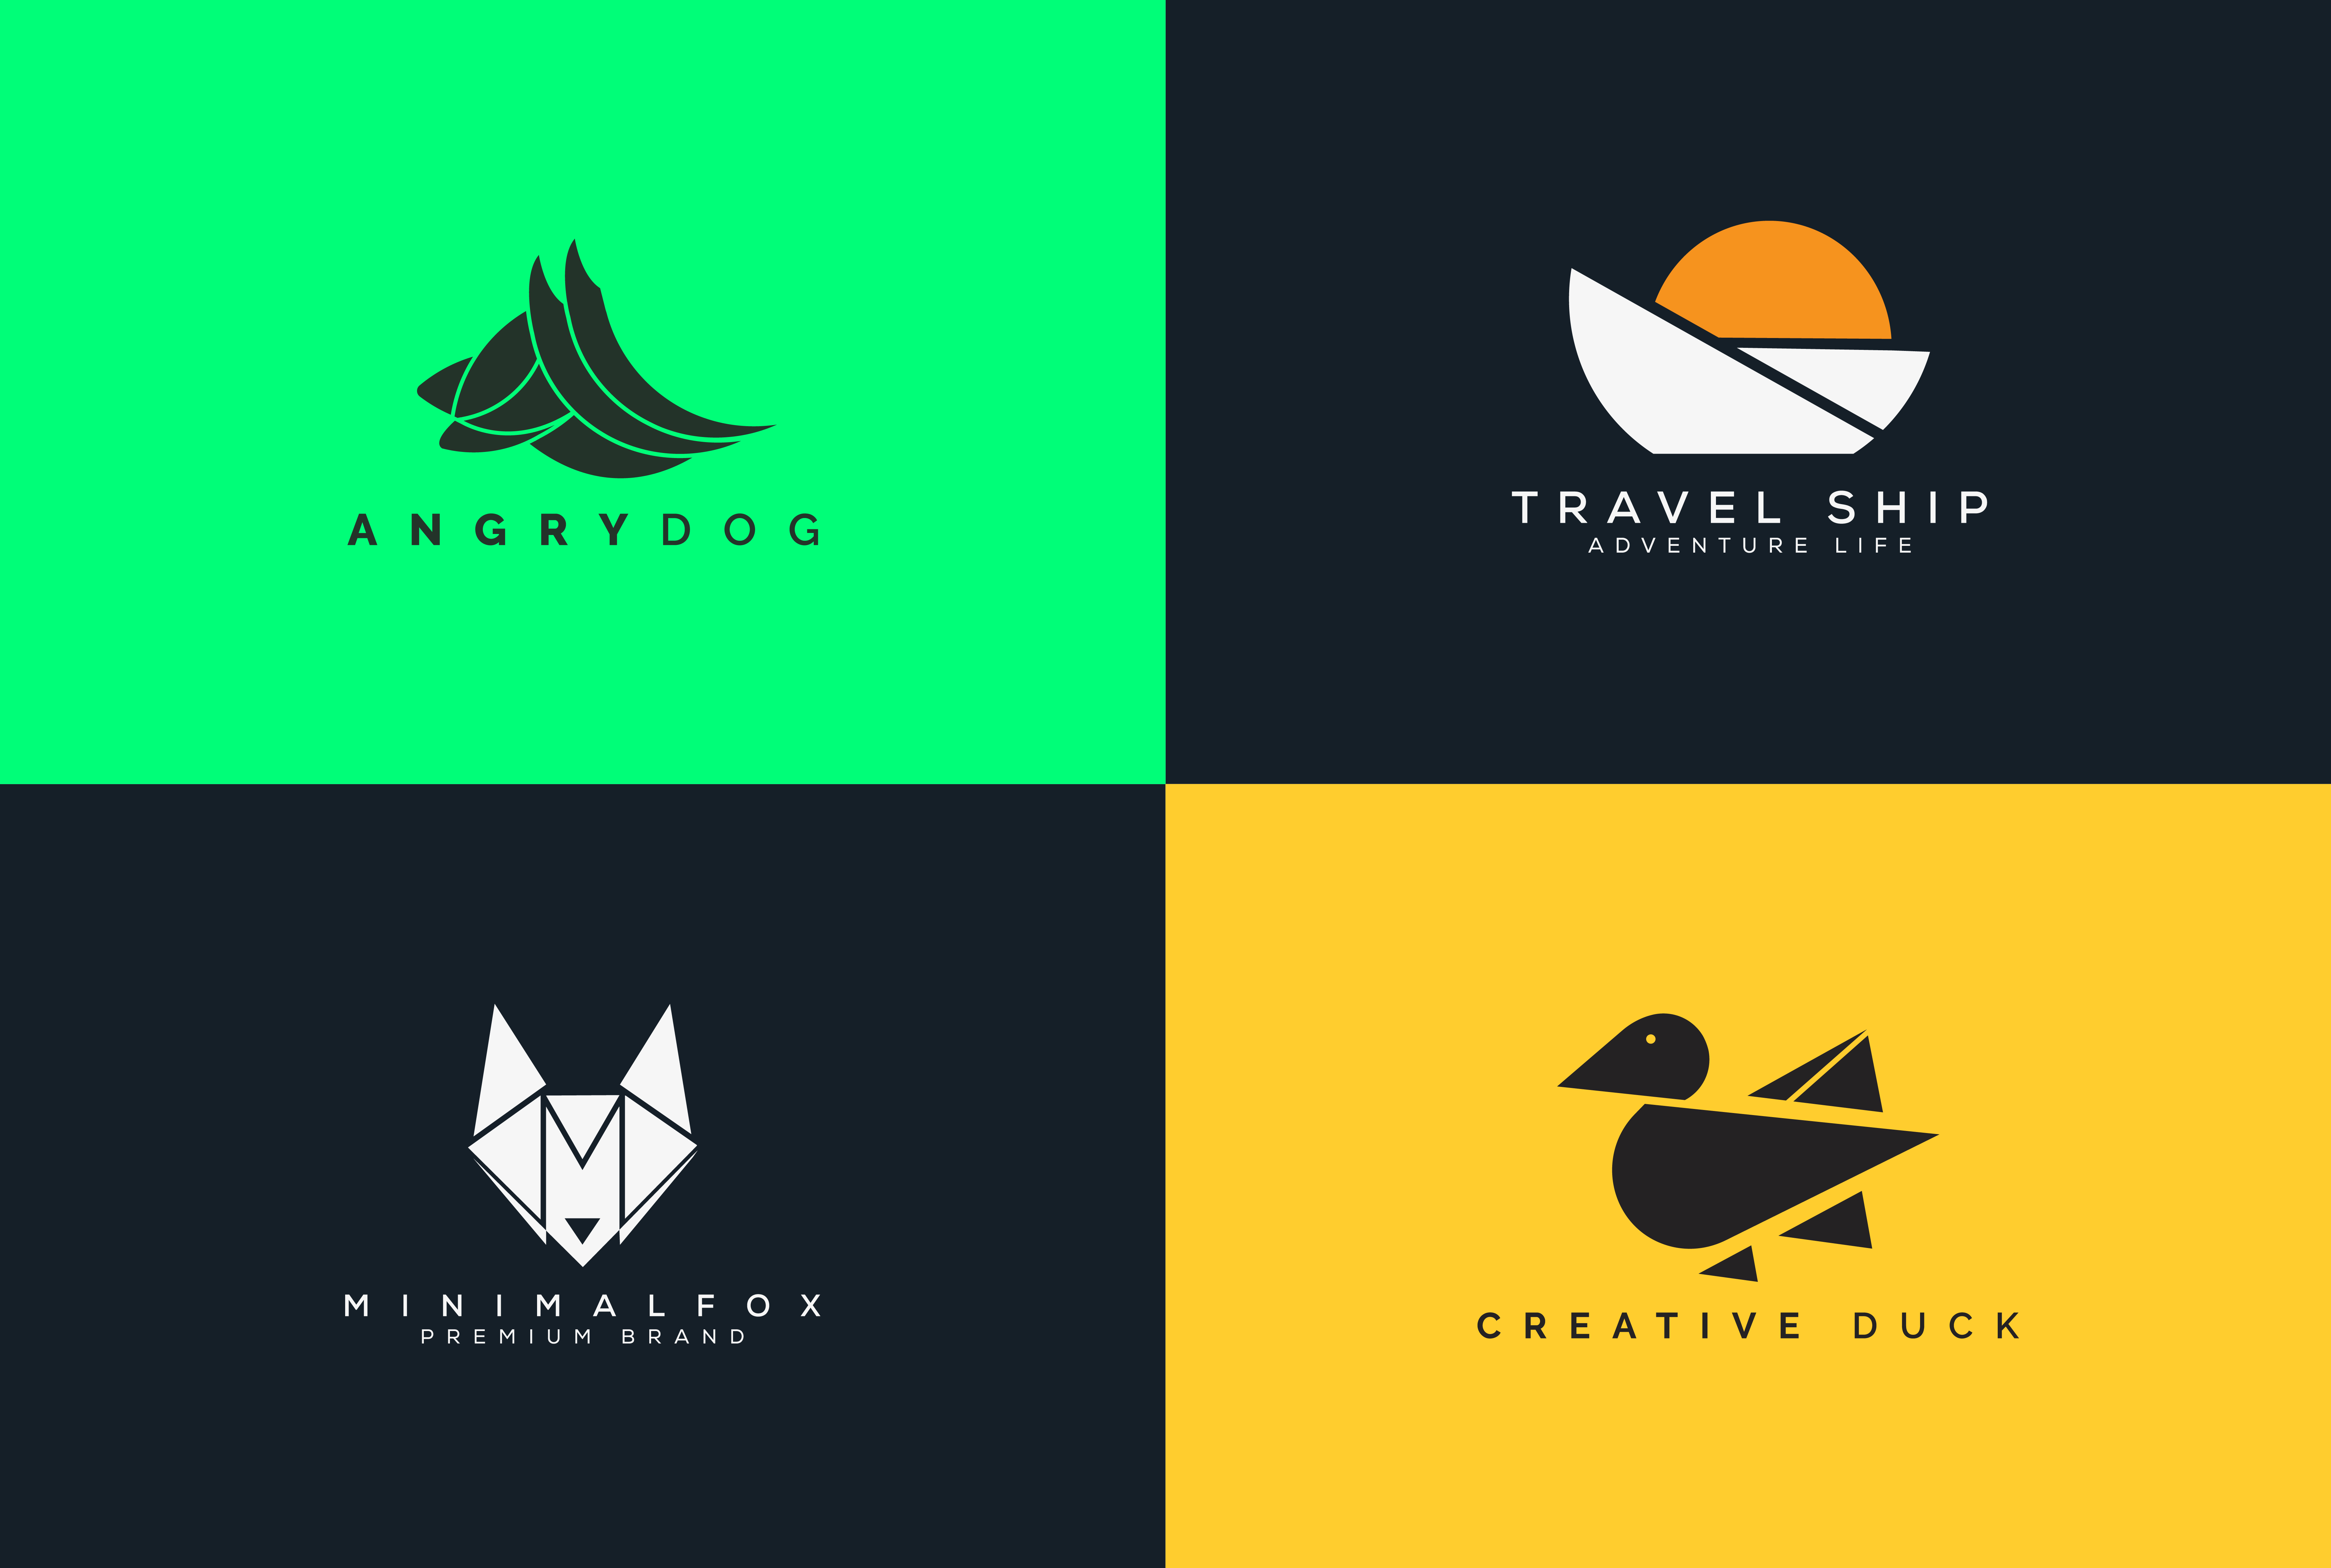 I will design 2 memorable modern minimalist business logo design